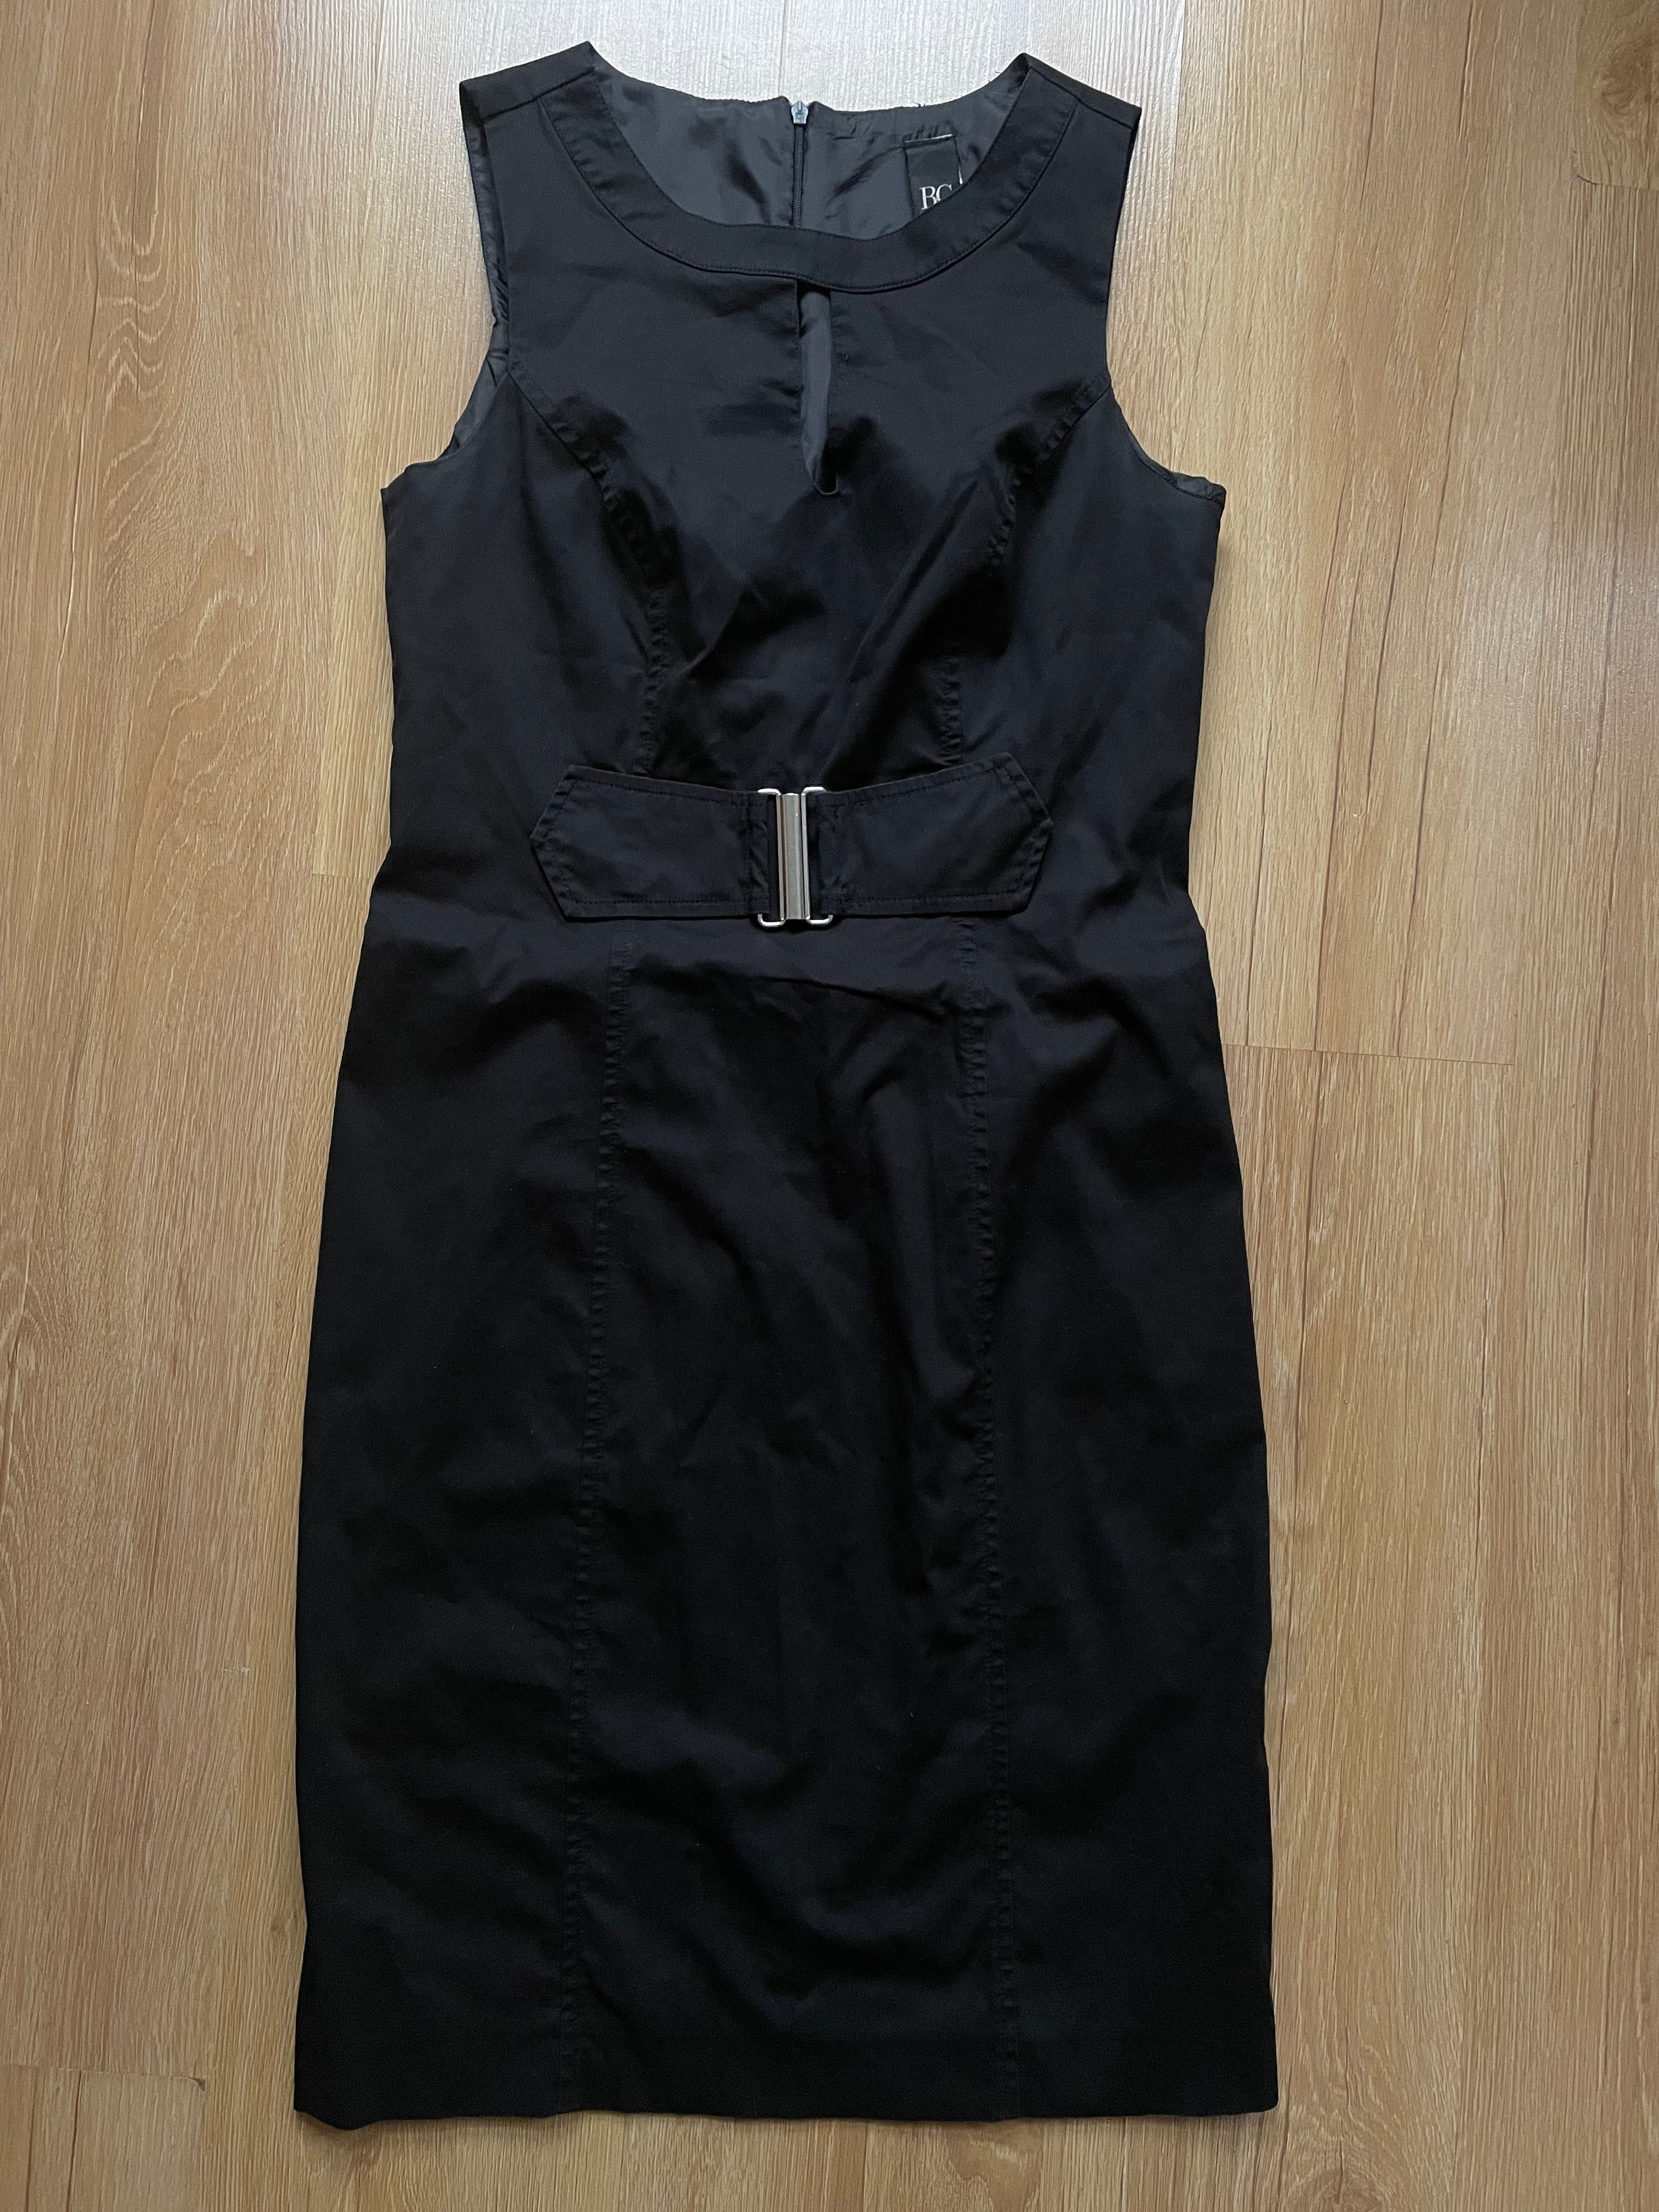 Czarna dopasowana sukienka bez rękawków Princeska BC 36/S